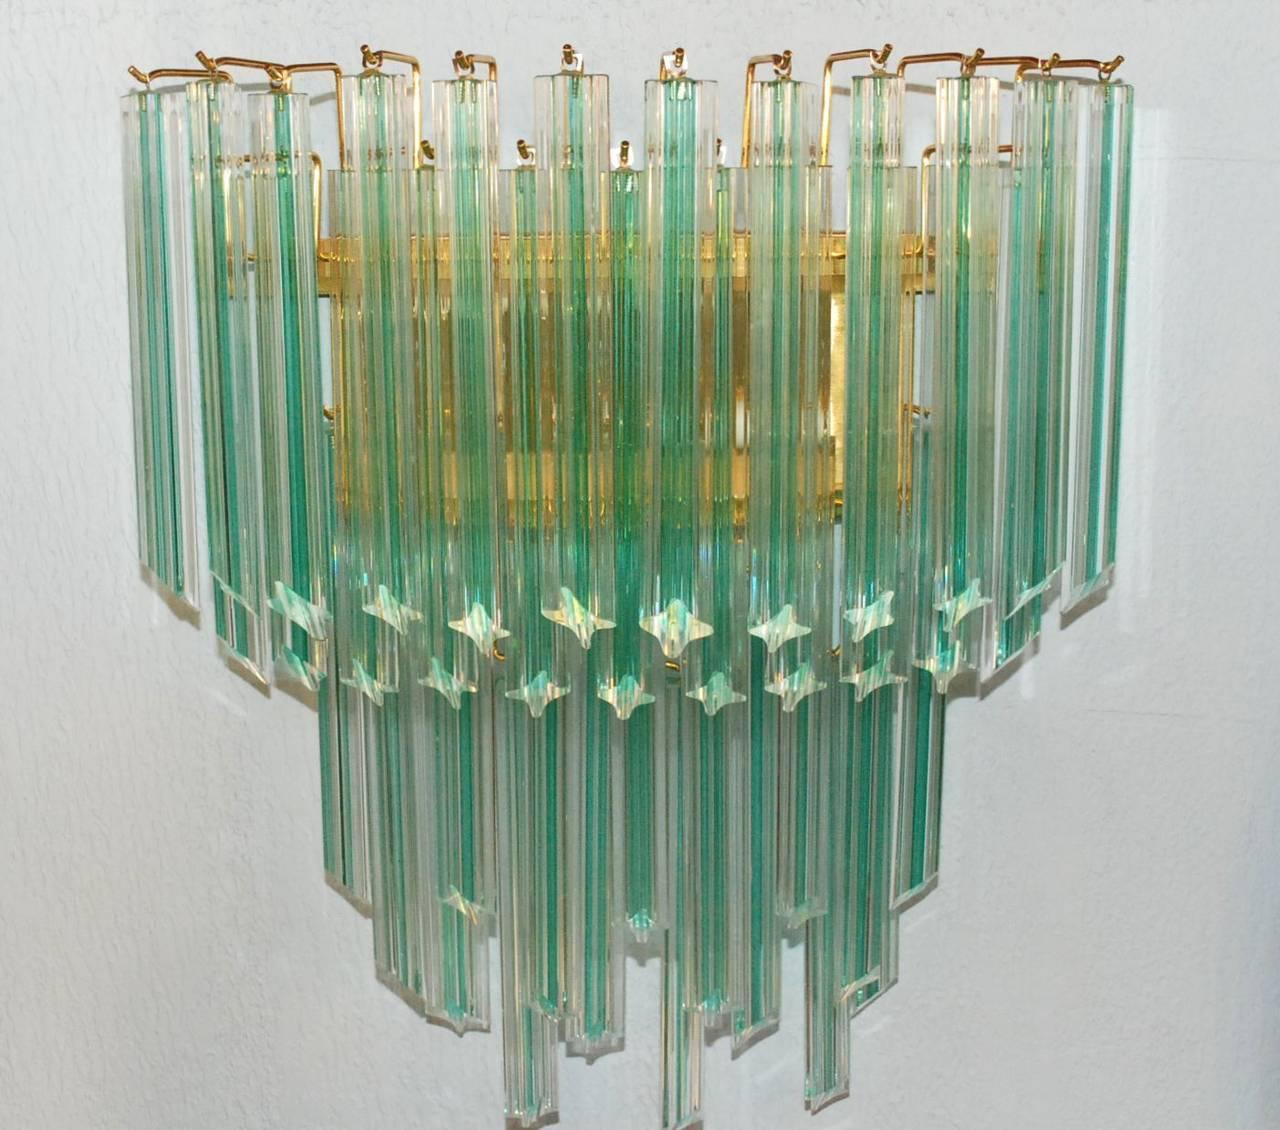 Murano aquamarine Quadriedri glass on brass frames
2 lights / max 40W each